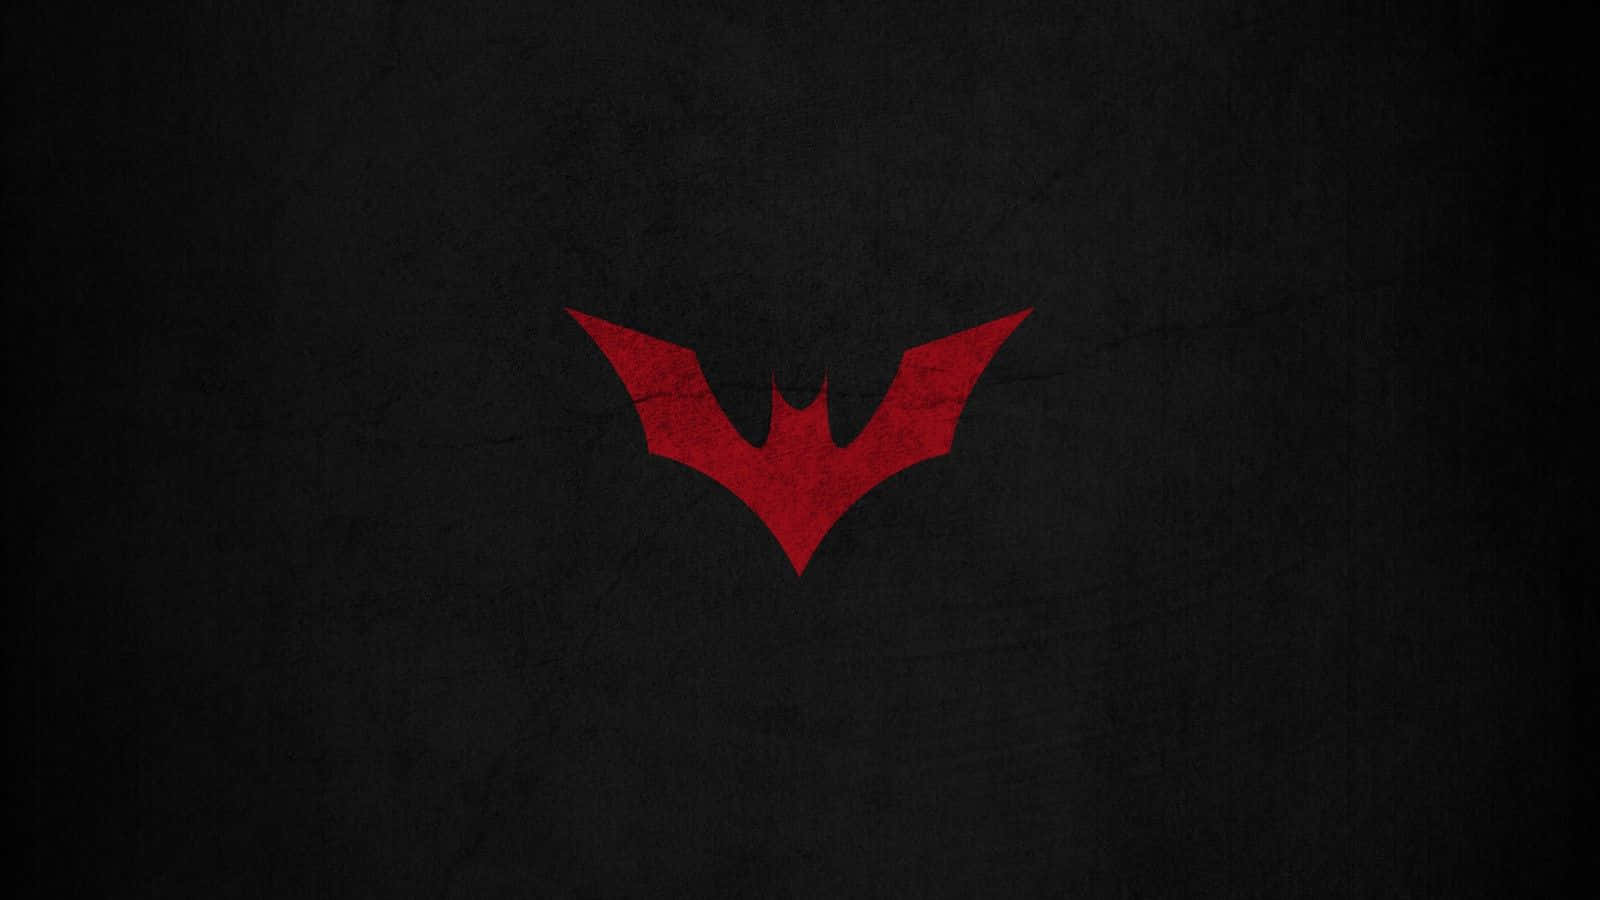 Dasrote Batman-logo Steht Stolz. Wallpaper